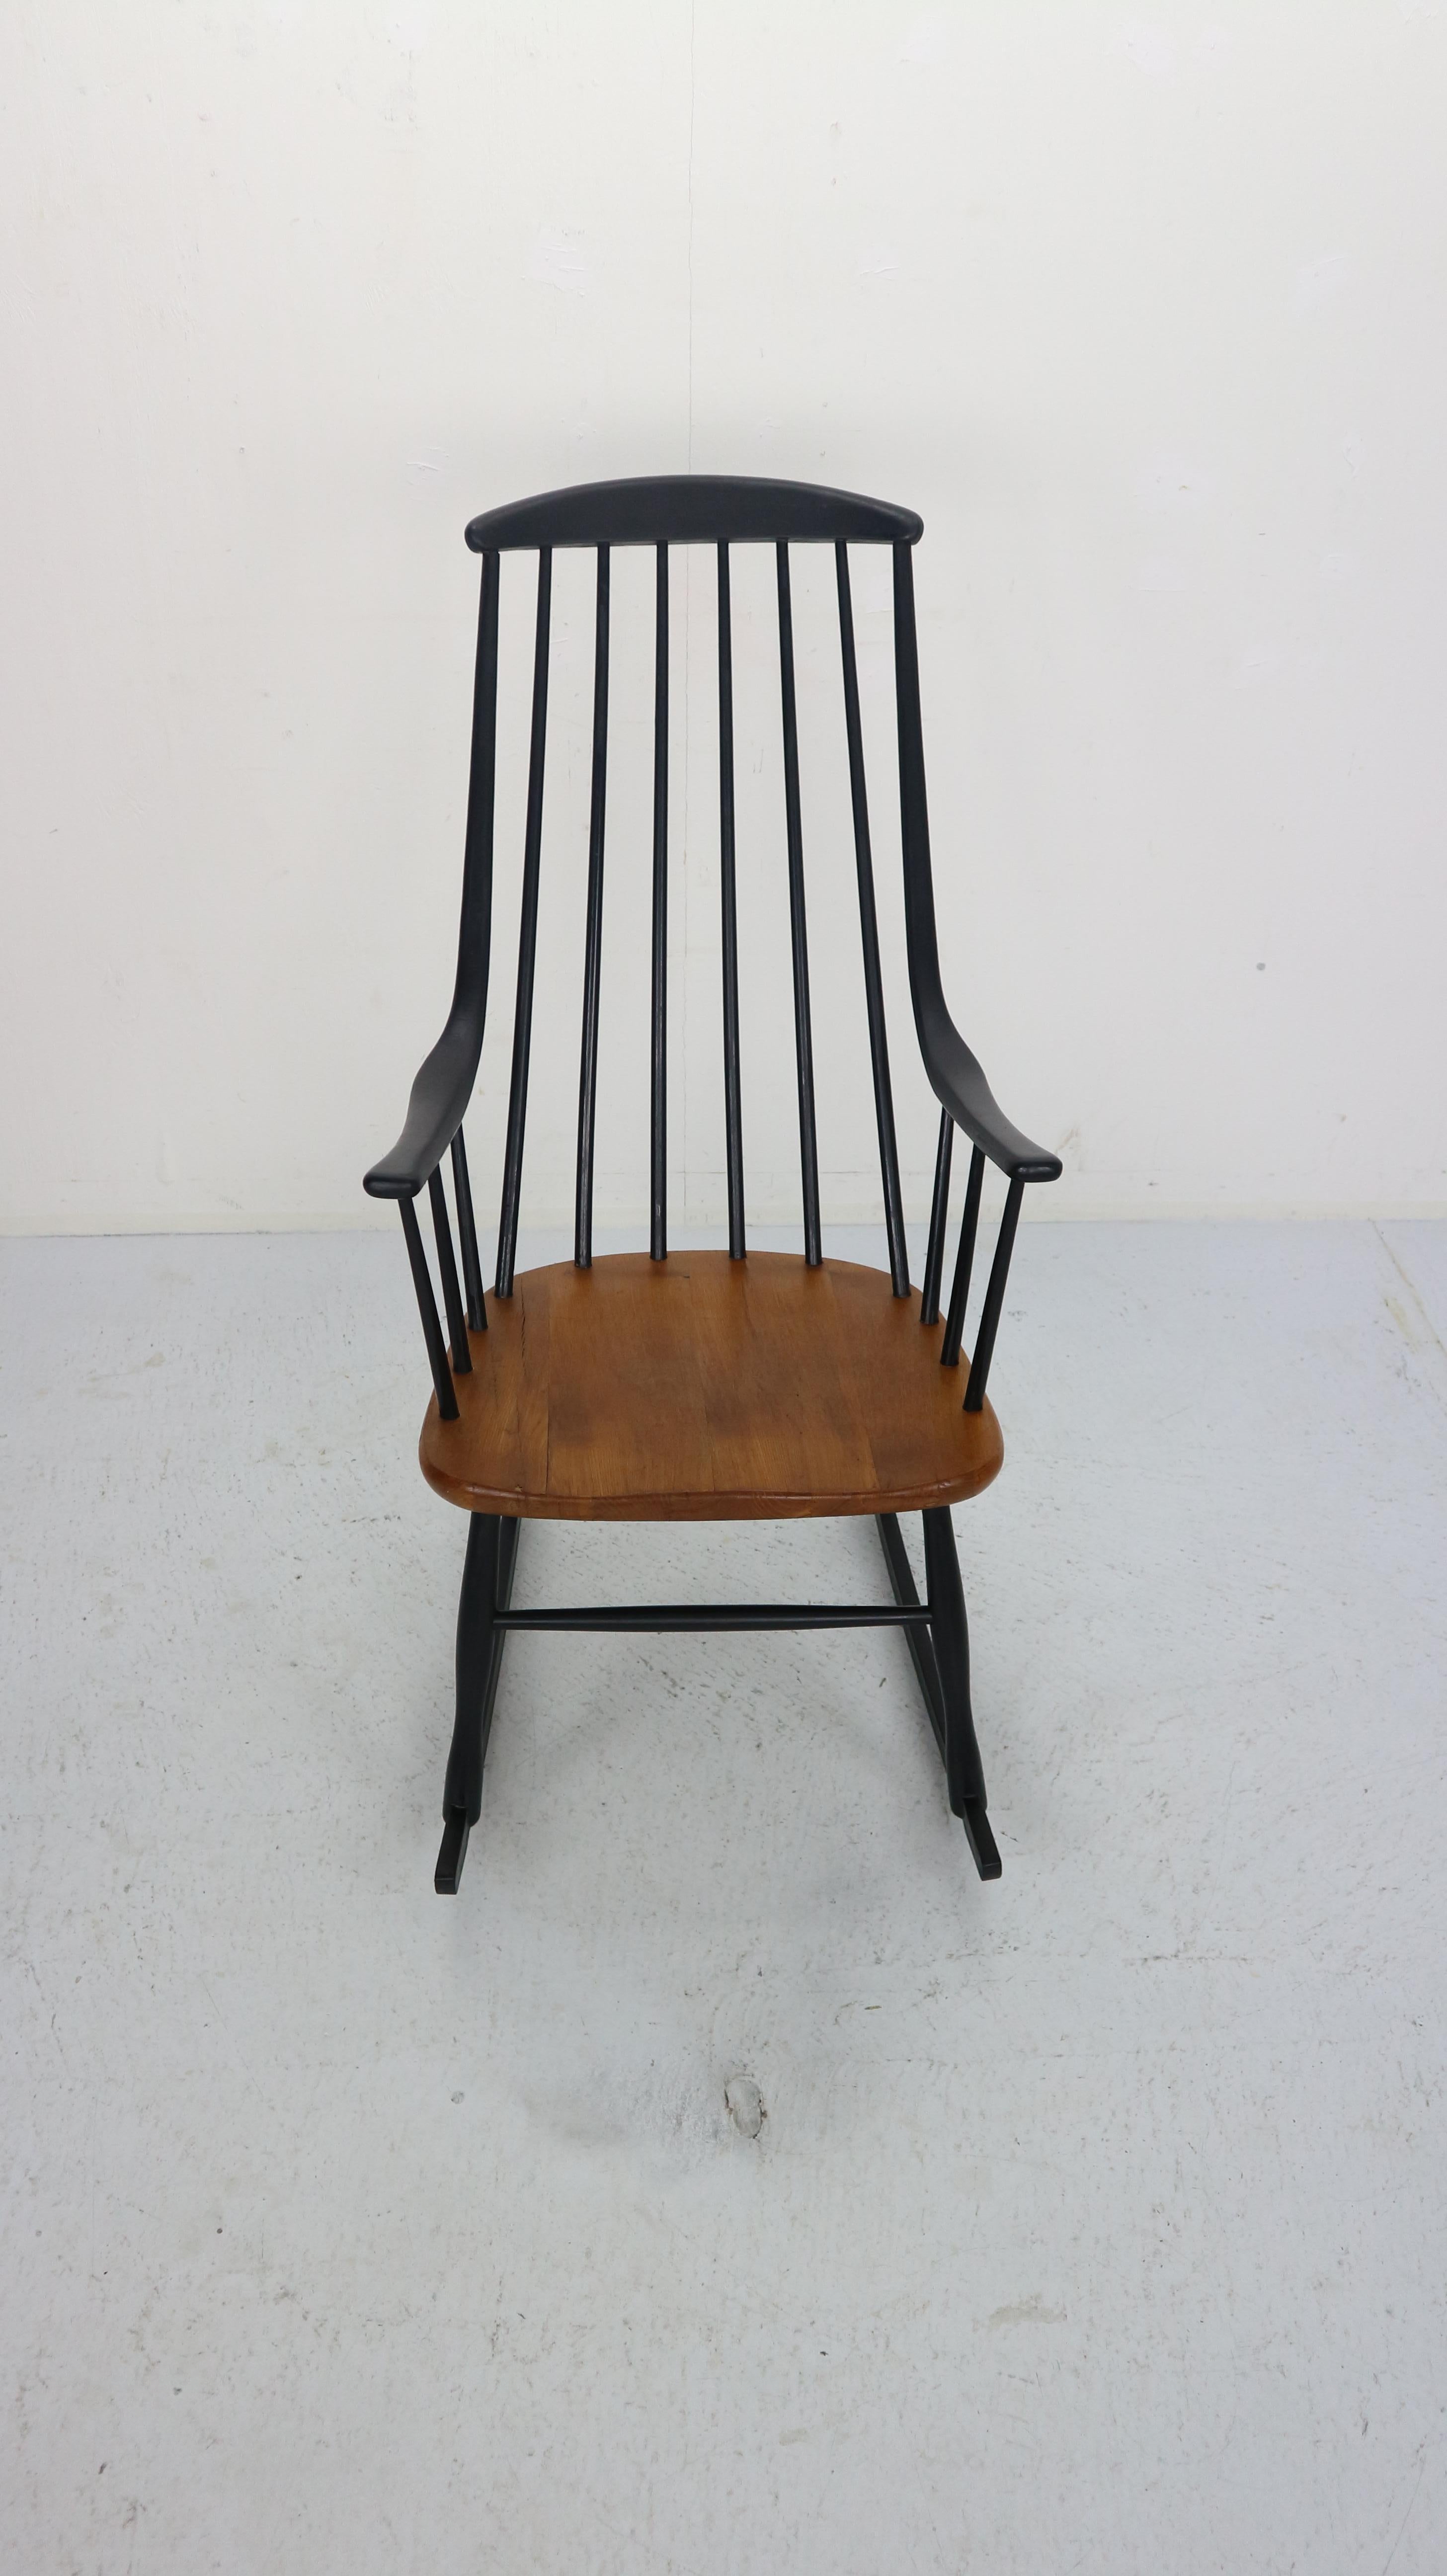 Swedish ‘Grandessa’ Wooden Rocking Chair by Lena Larsson For Nesto, 1960s